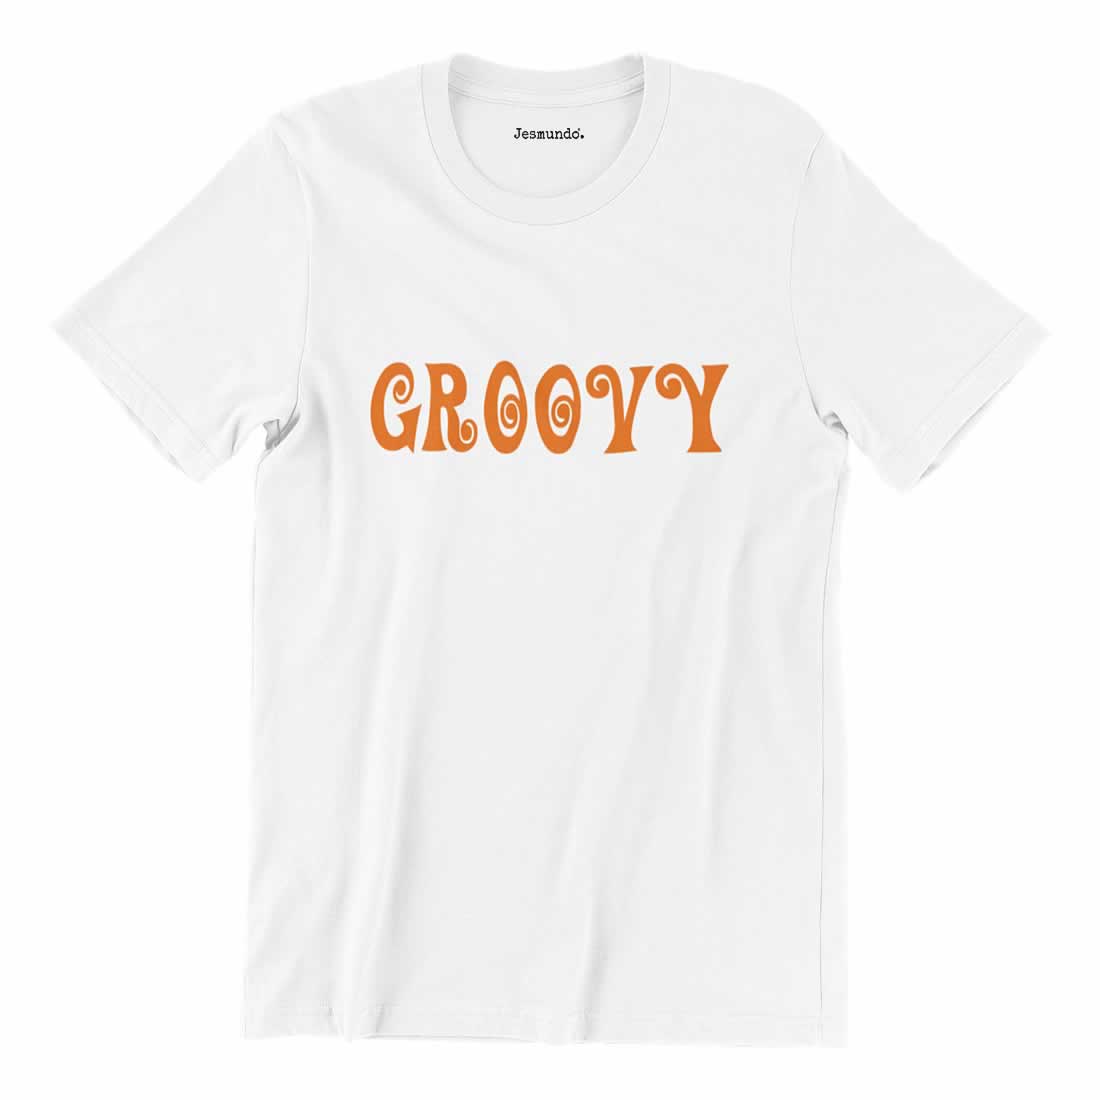 Retro Groovy Slogan T Shirt